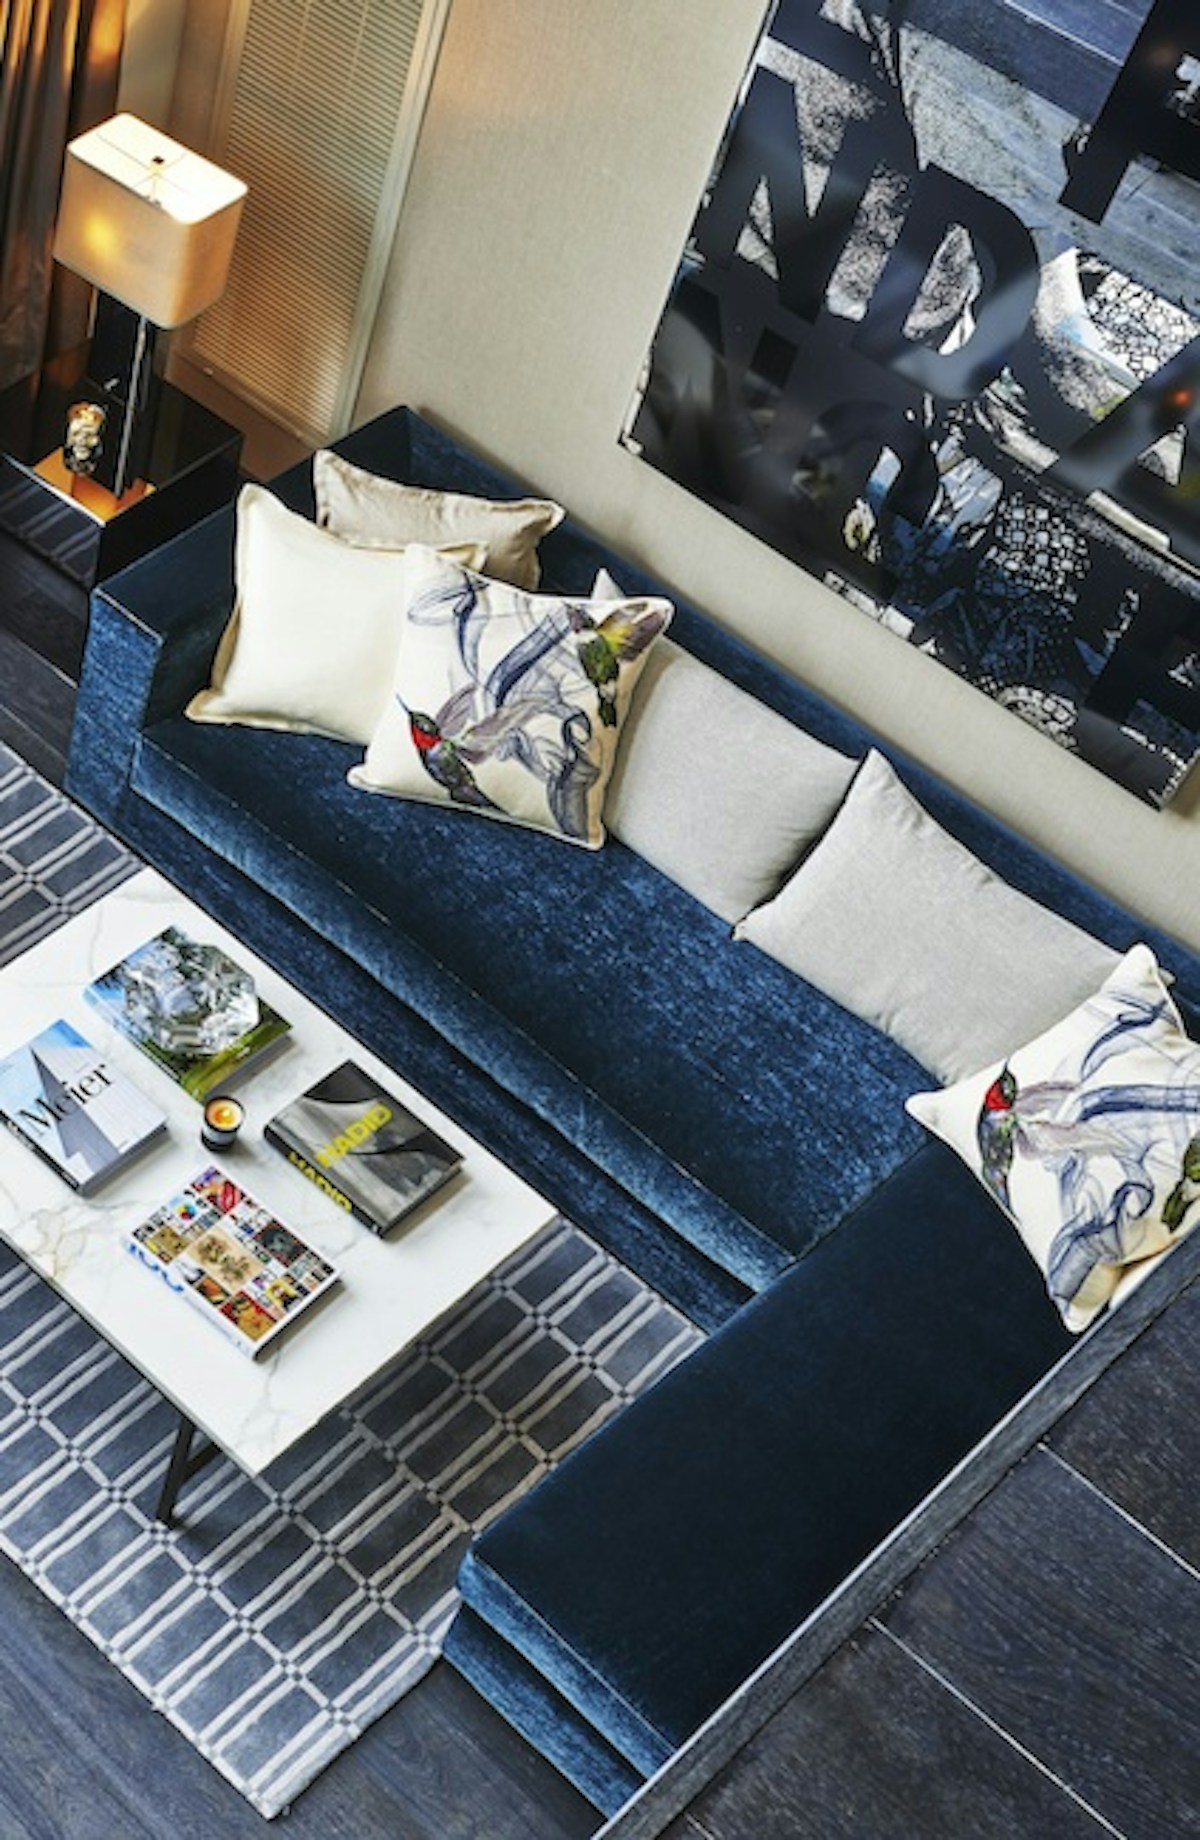 The Power of Statement Designer Sofas | Sofa Inspiration | LuxDeco.com Style Guide